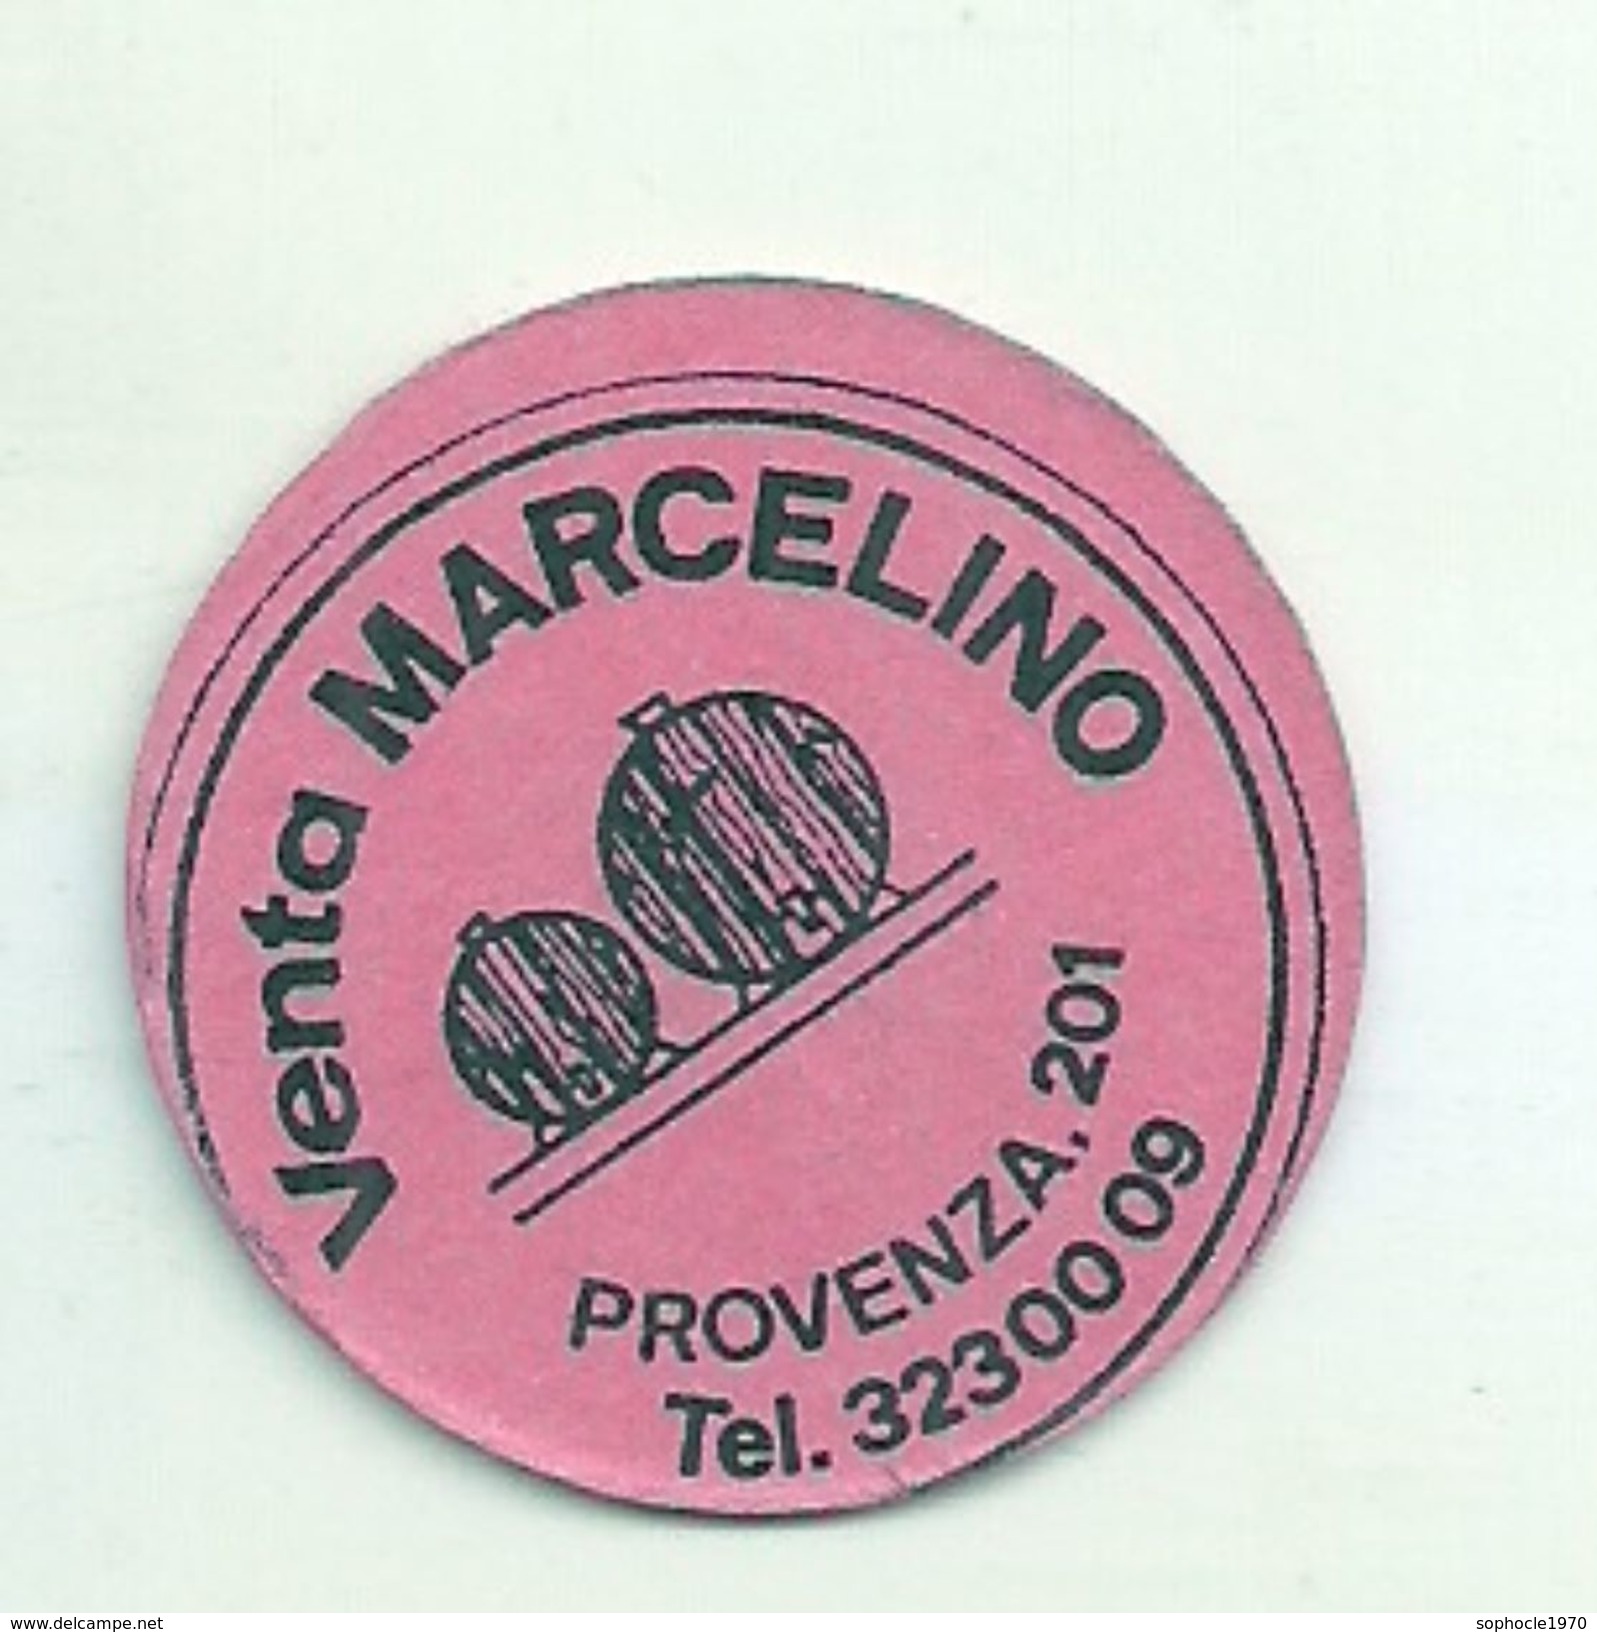 ESPAGNE - 1977 - Monnaie De Carton FRACCIONARIO Venta Marcelino Provenza 201 -  Monnaies De Nécessité